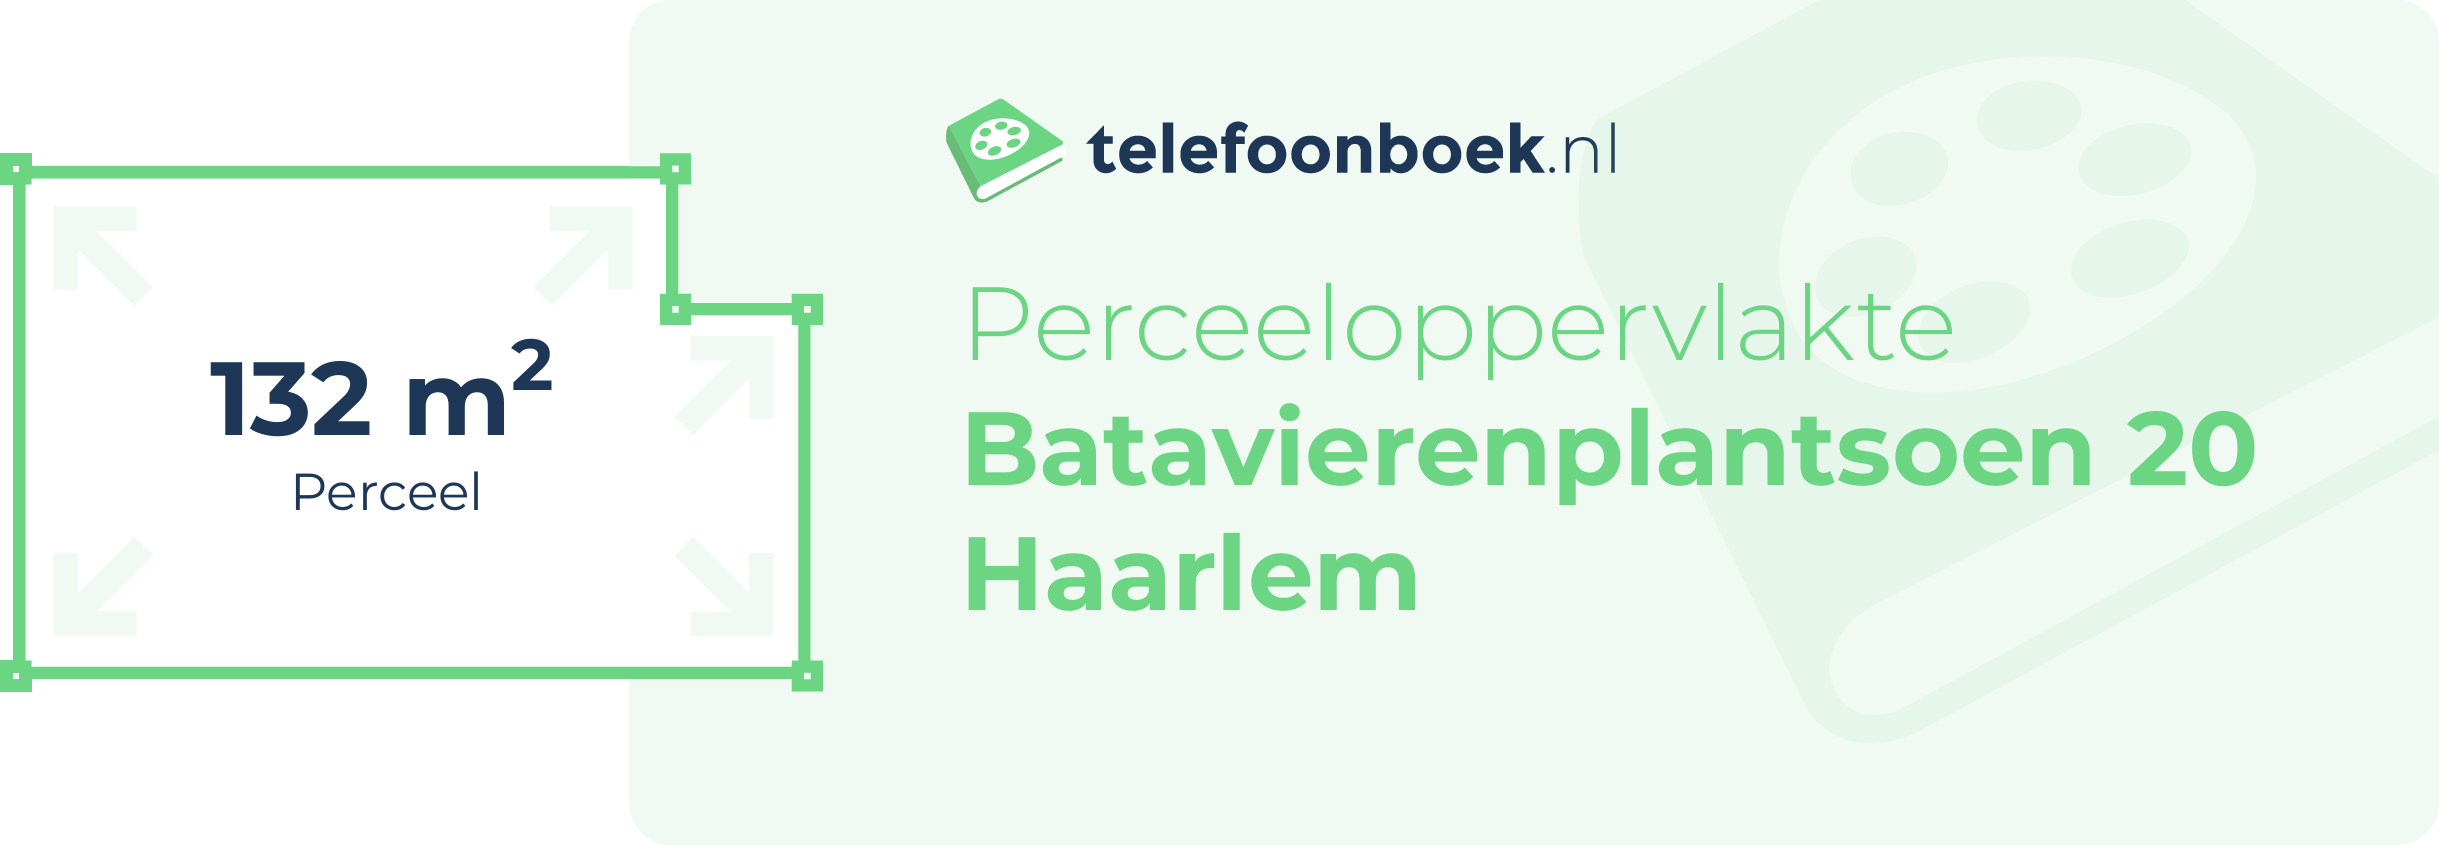 Perceeloppervlakte Batavierenplantsoen 20 Haarlem